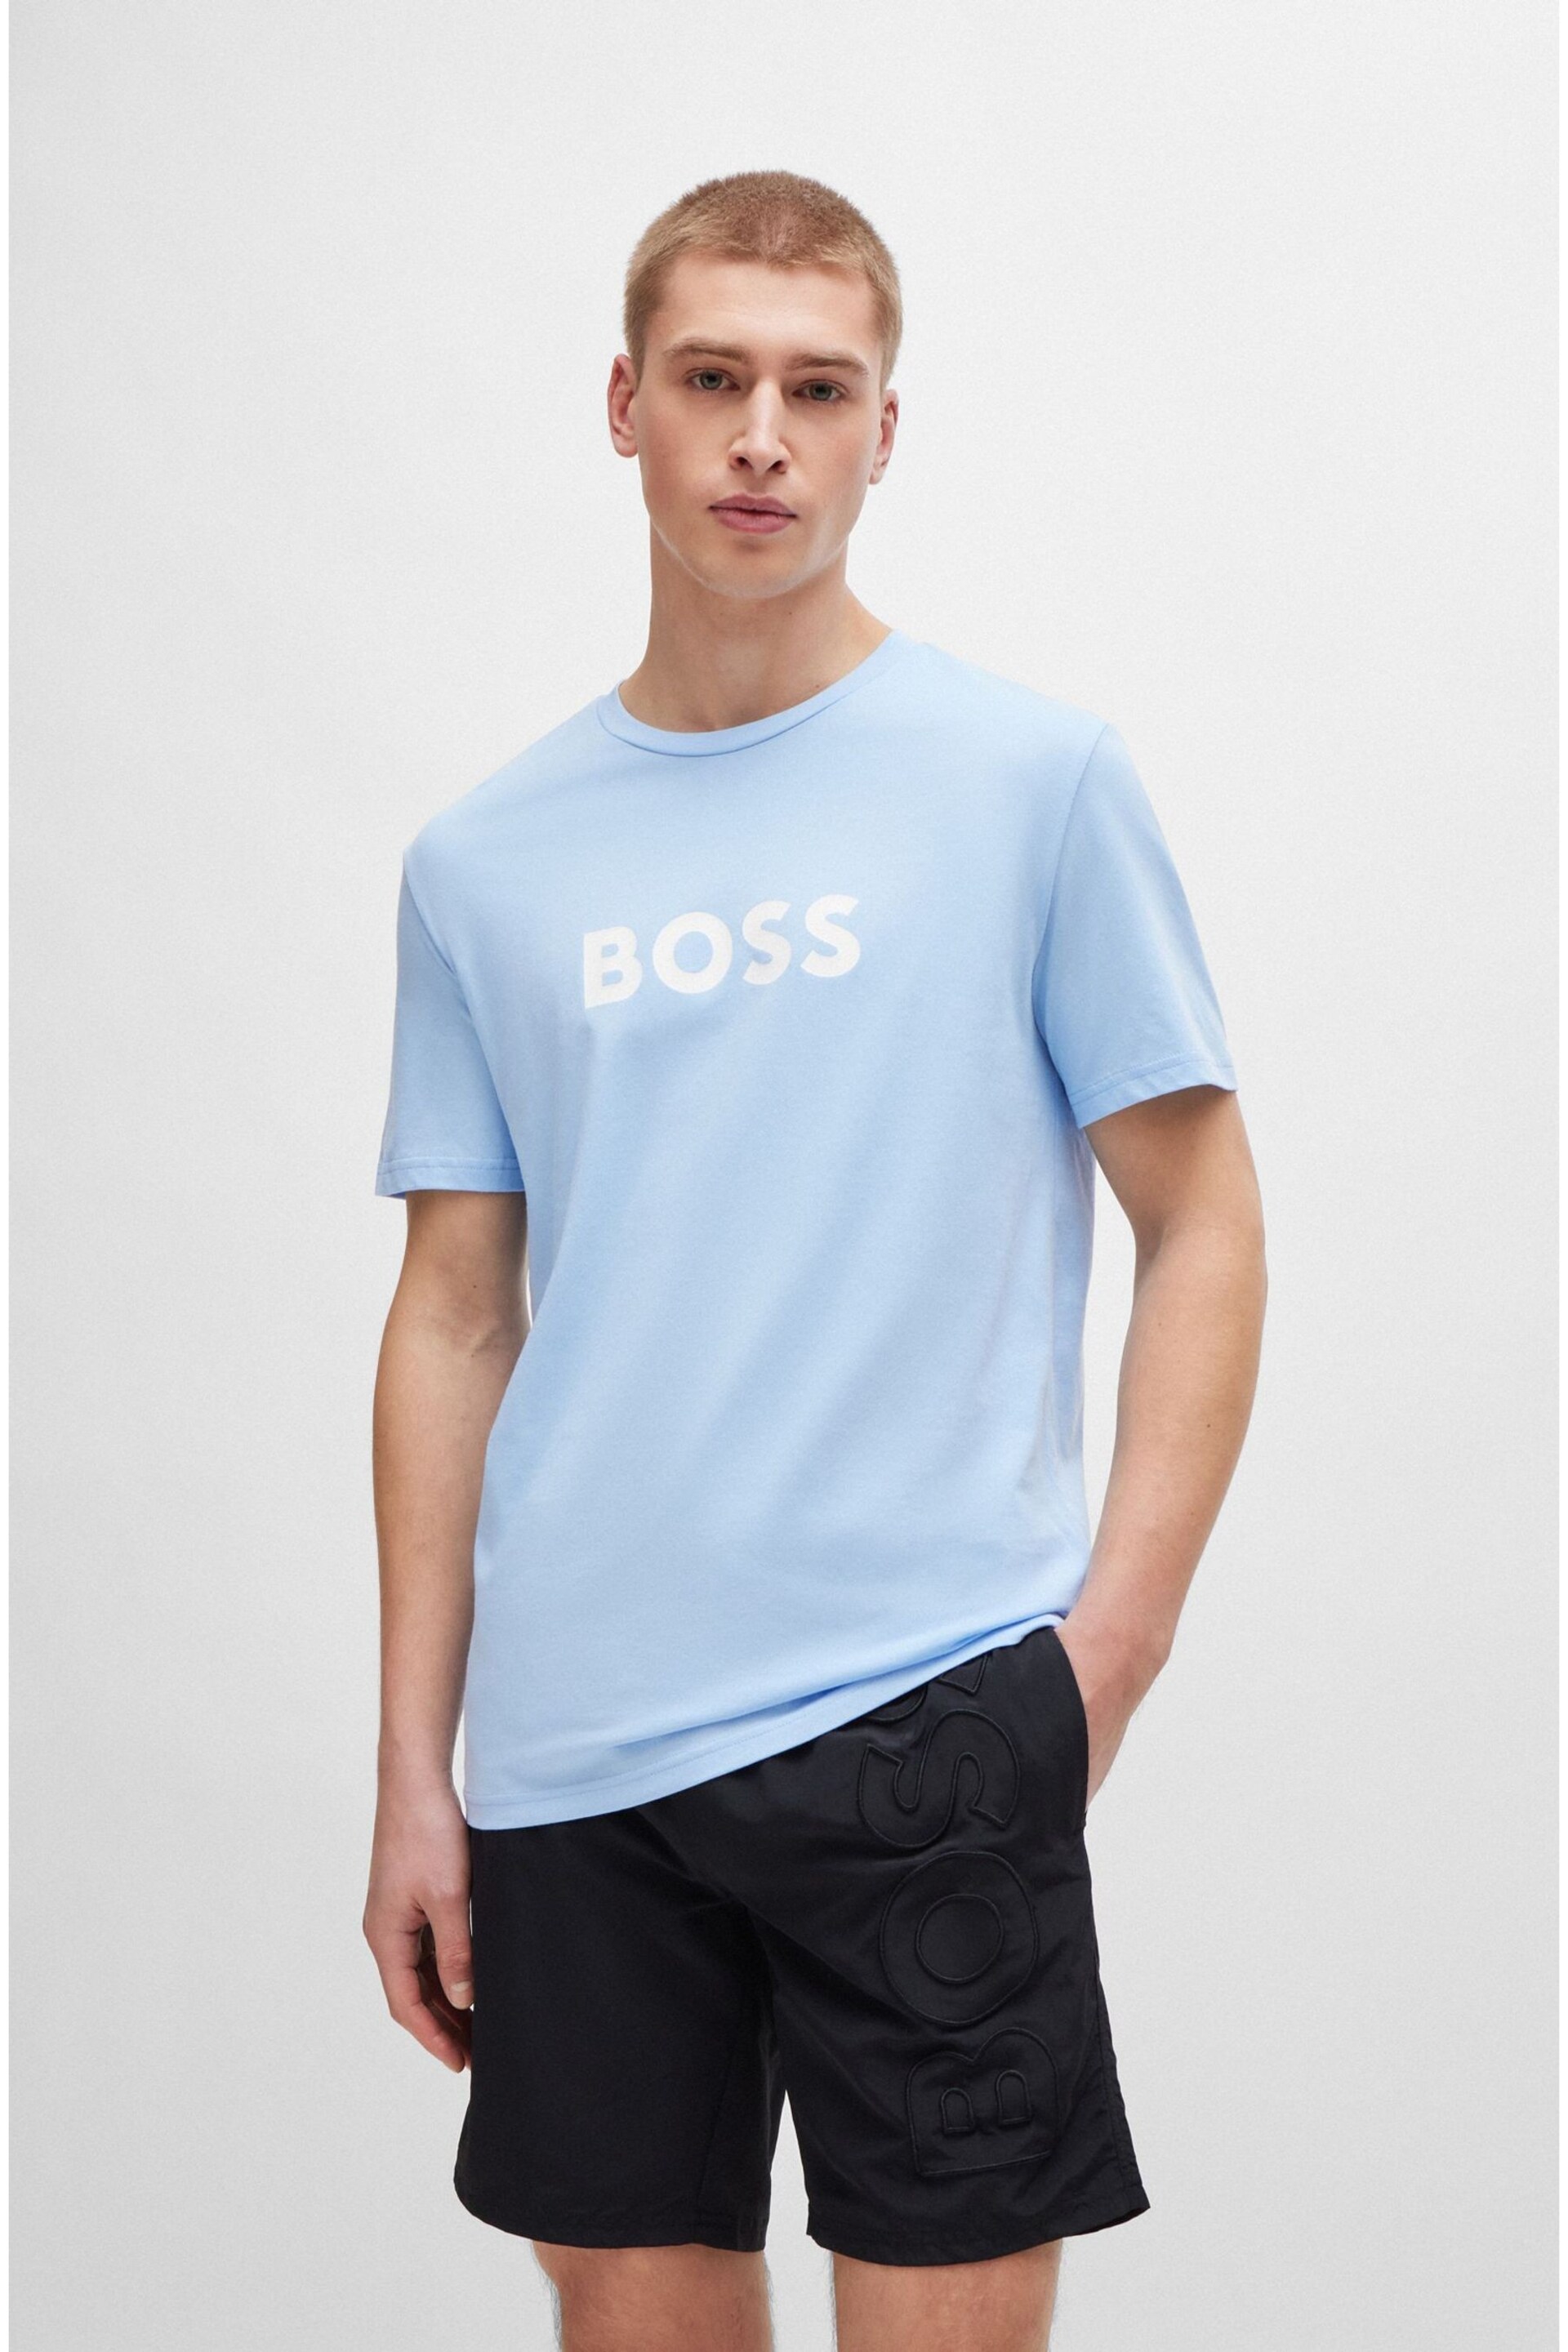 BOSS Blue Large Chest Logo T-Shirt - Image 1 of 3